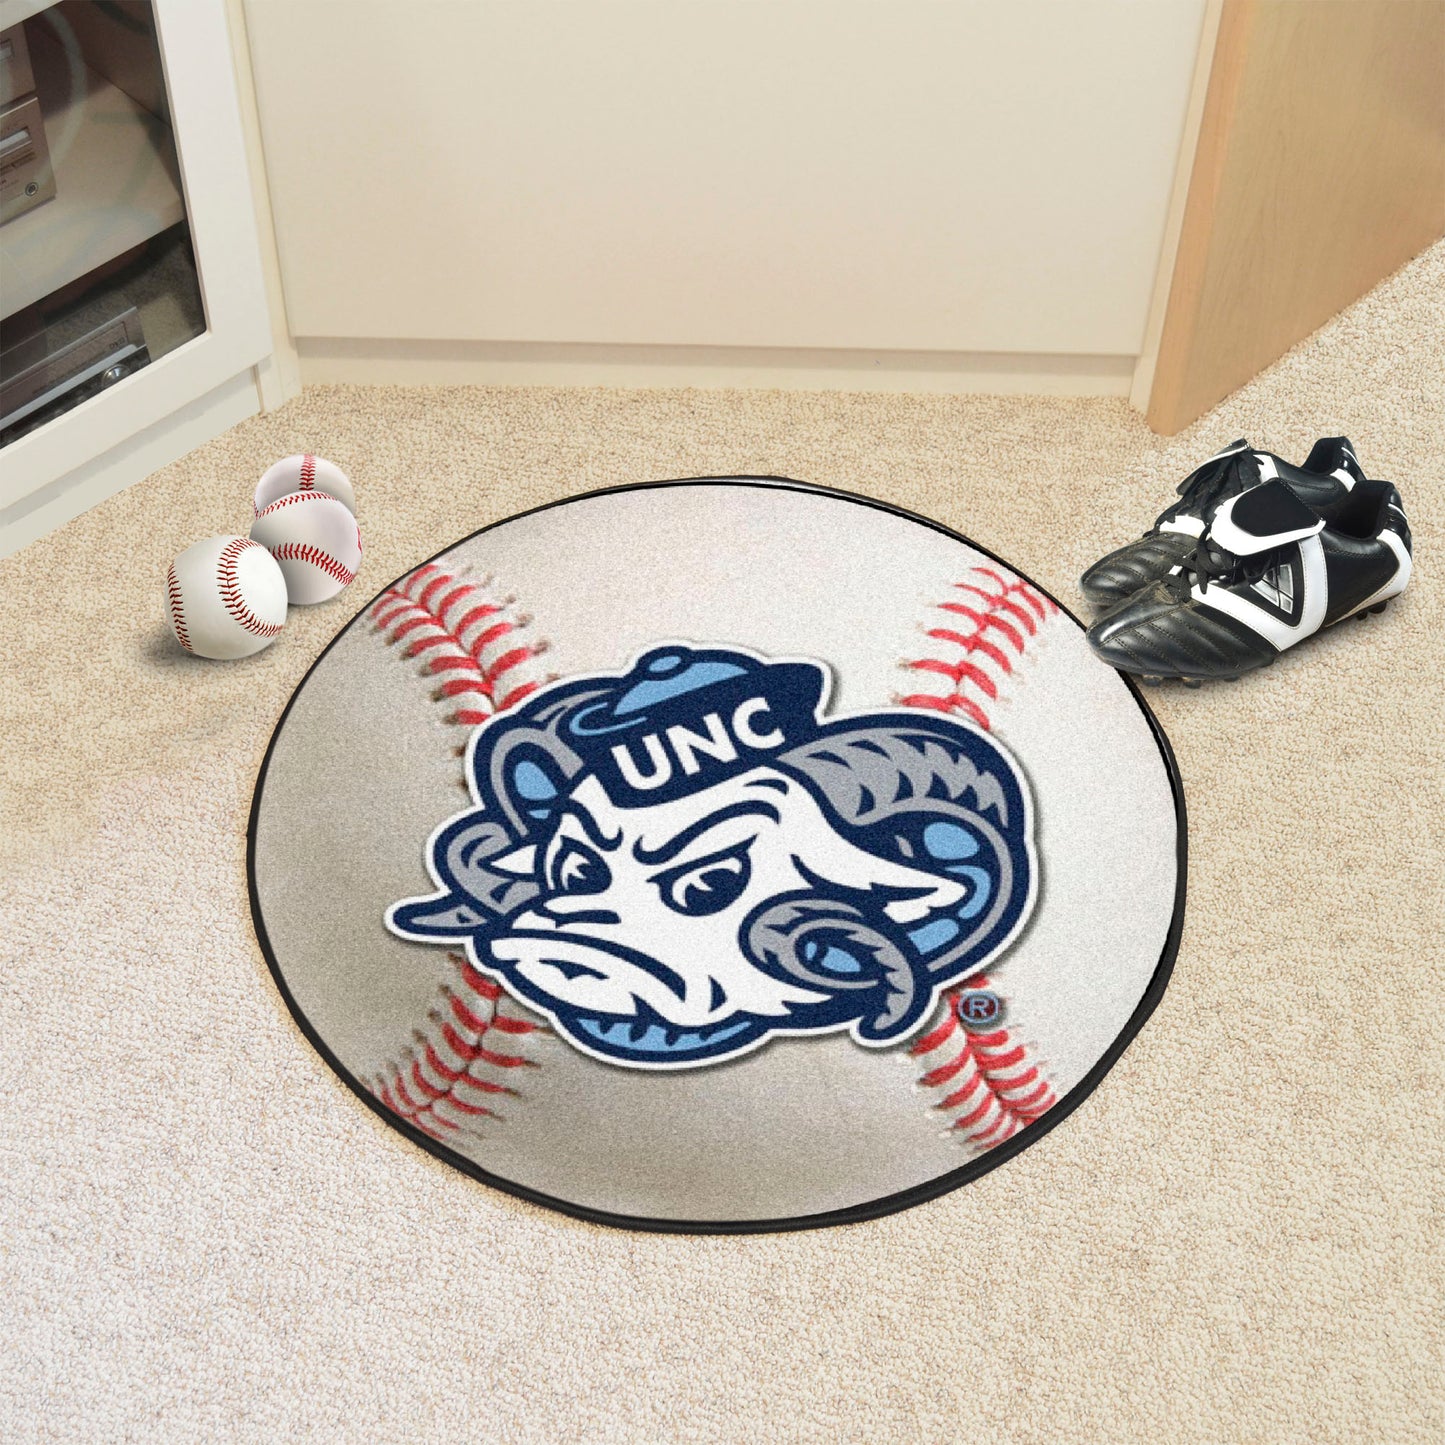 North Carolina Tar Heels Baseball Mat with Ram Logo by Fanmats